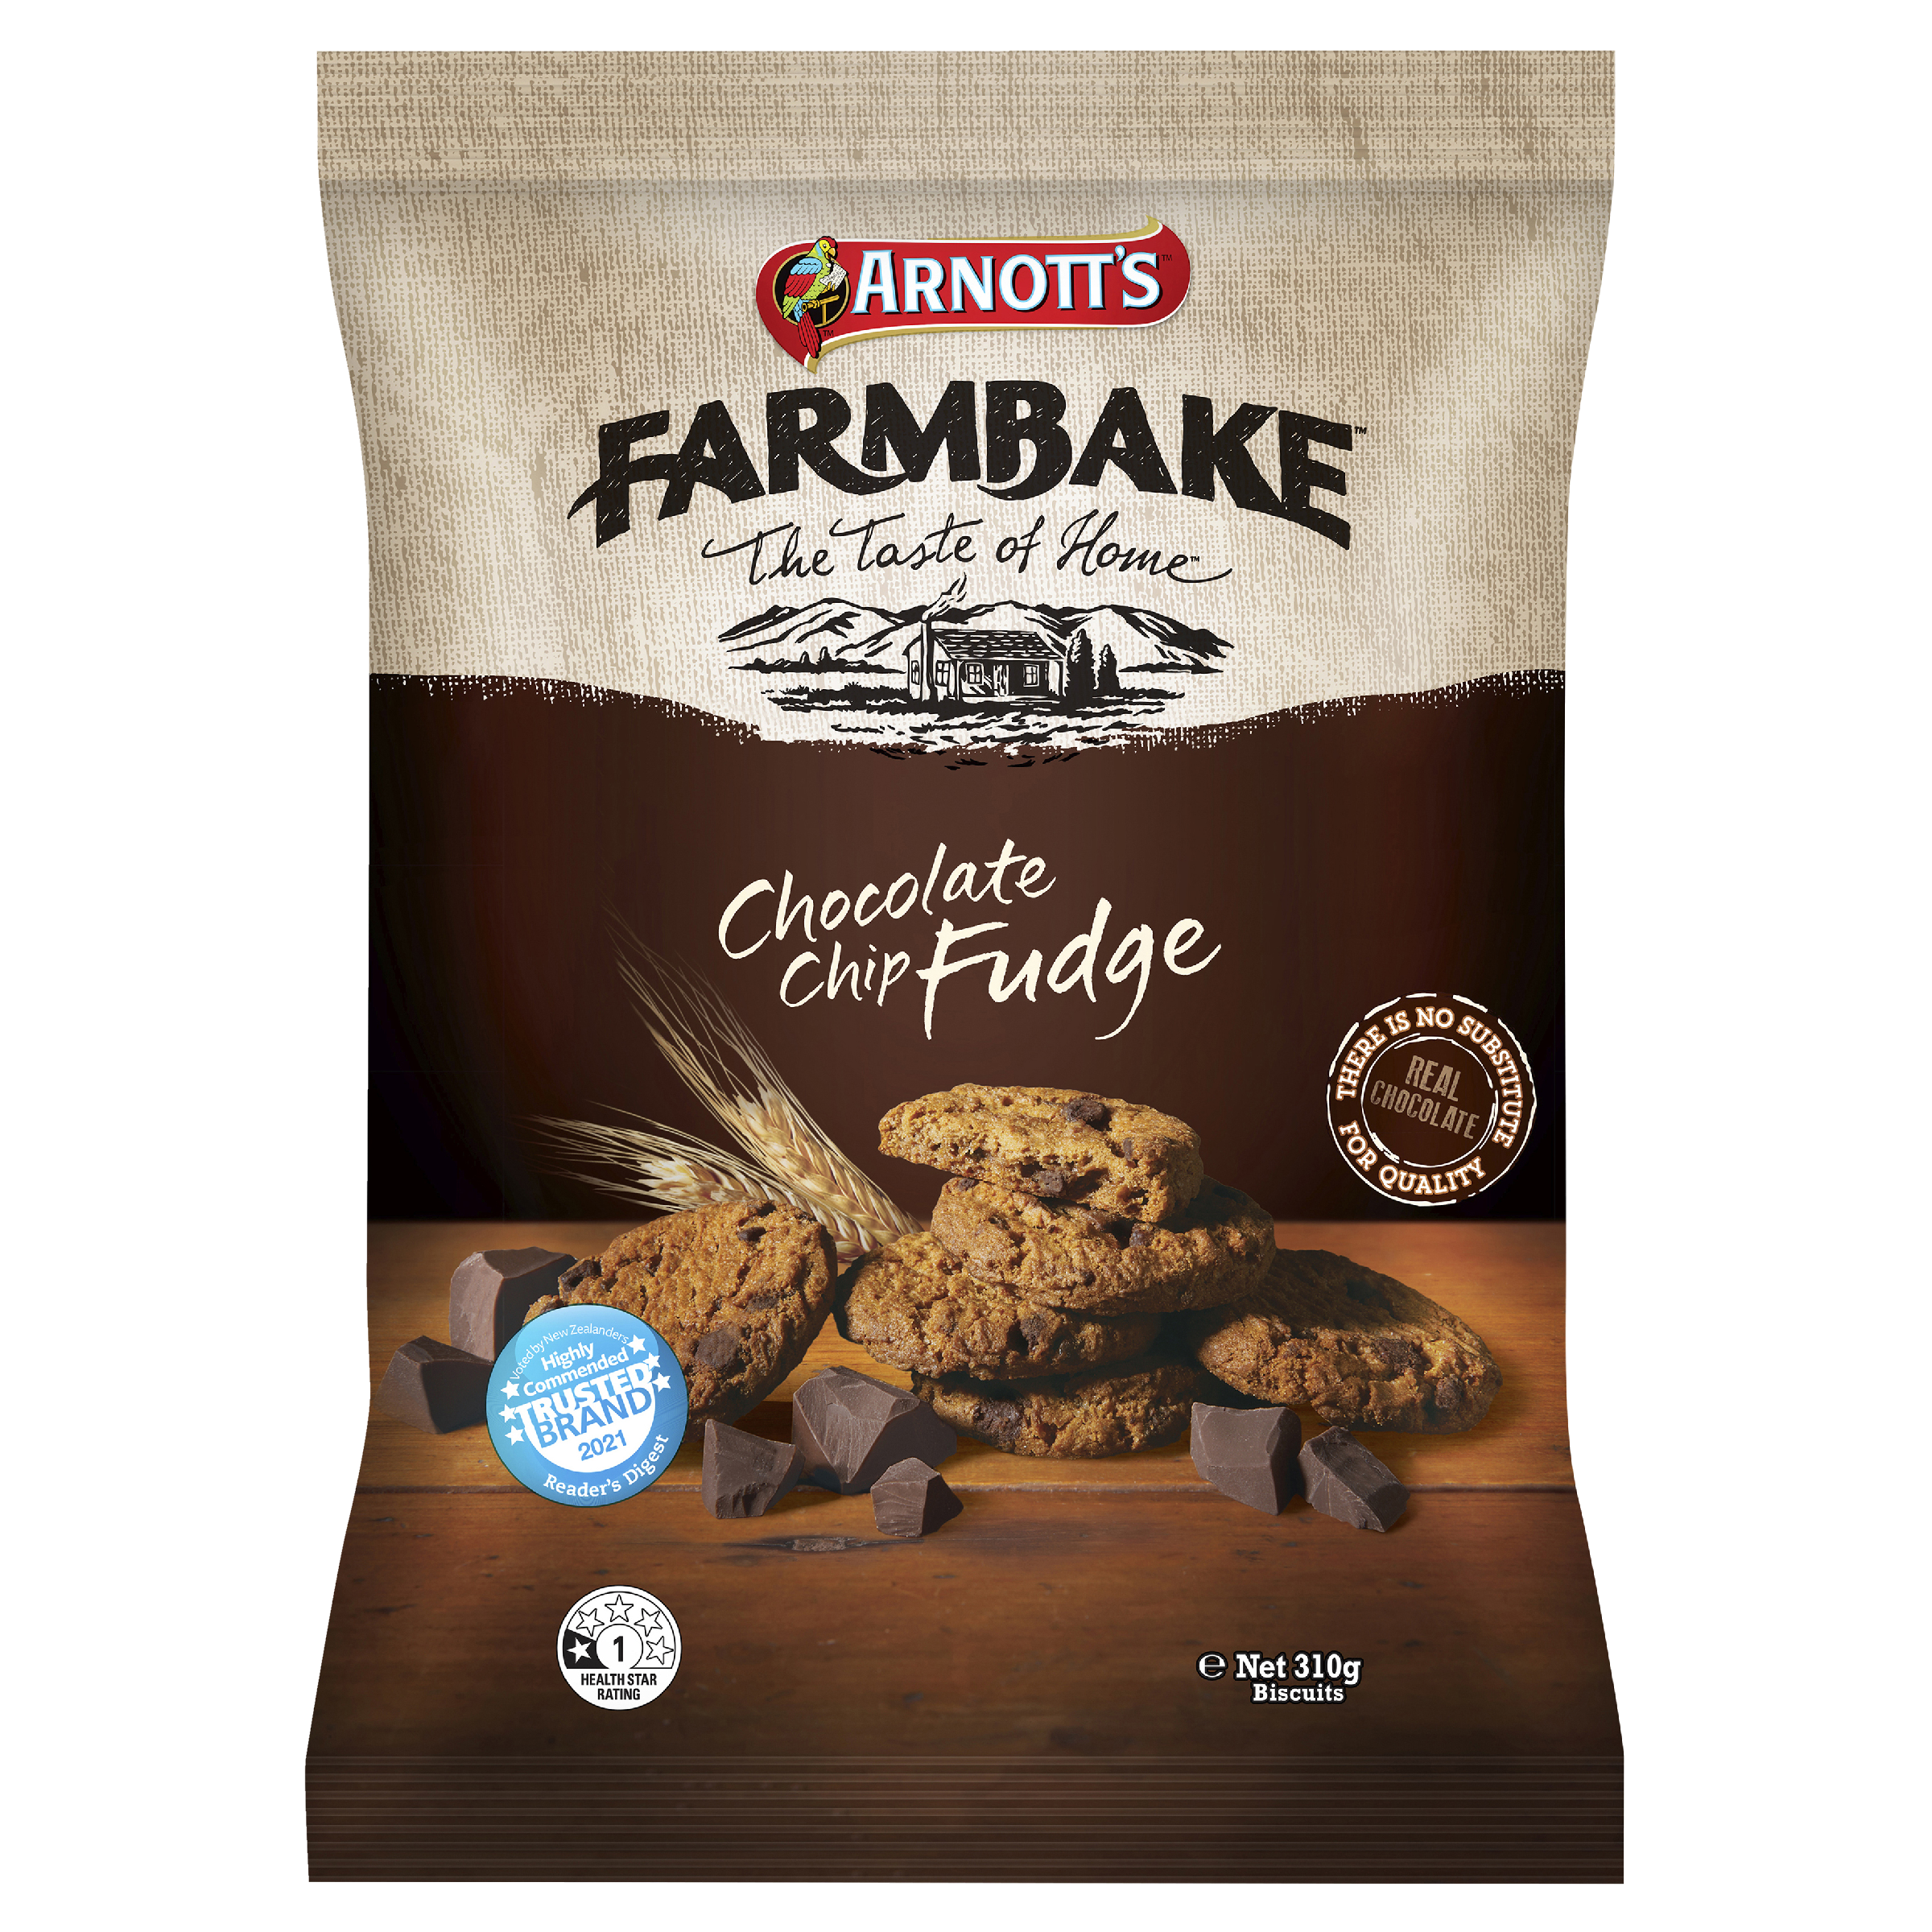 Farmbake Chocolate Chip Fudge